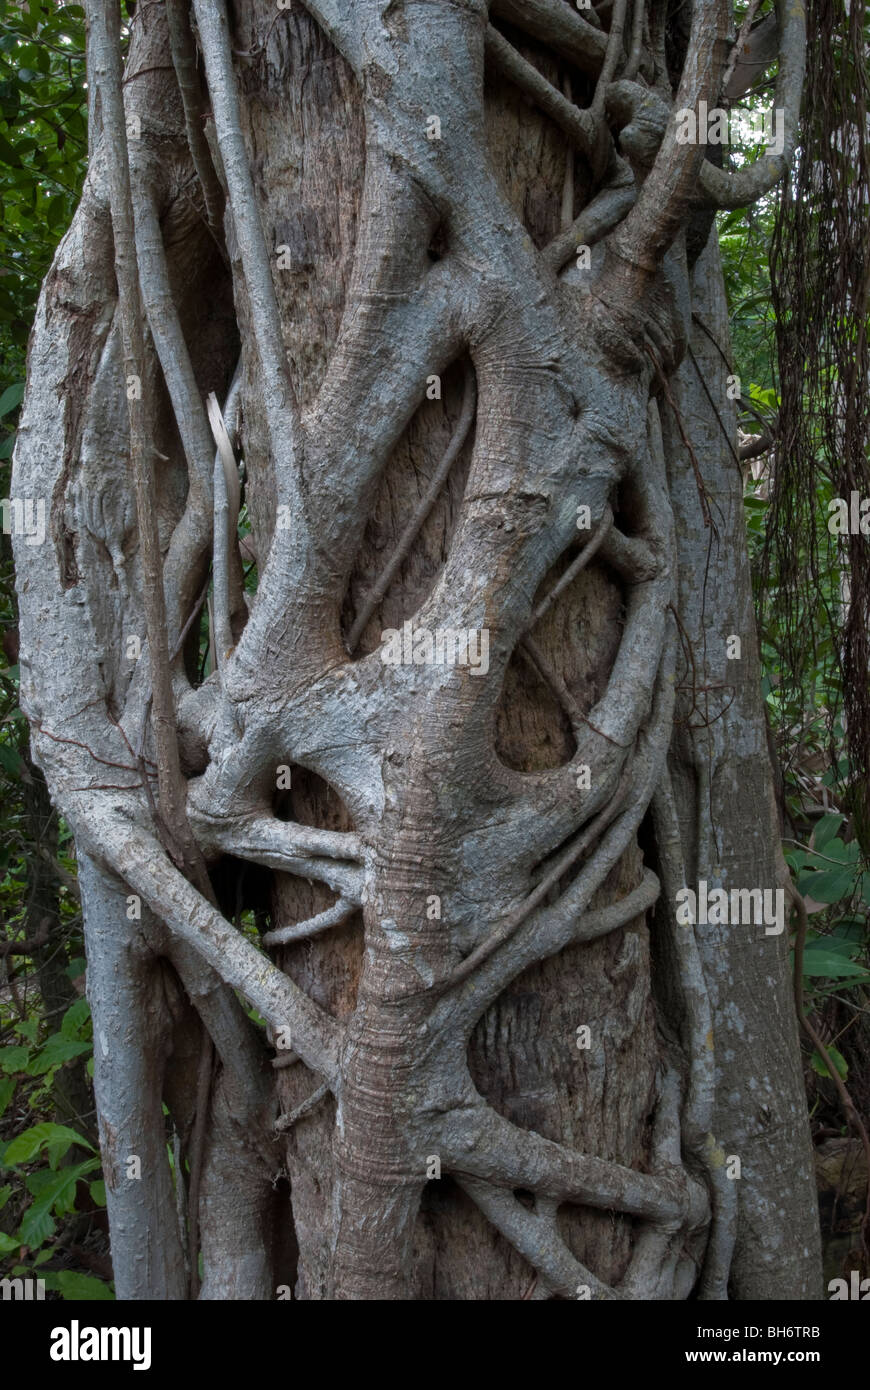 gumbo limbo tree medicinal uses parasites